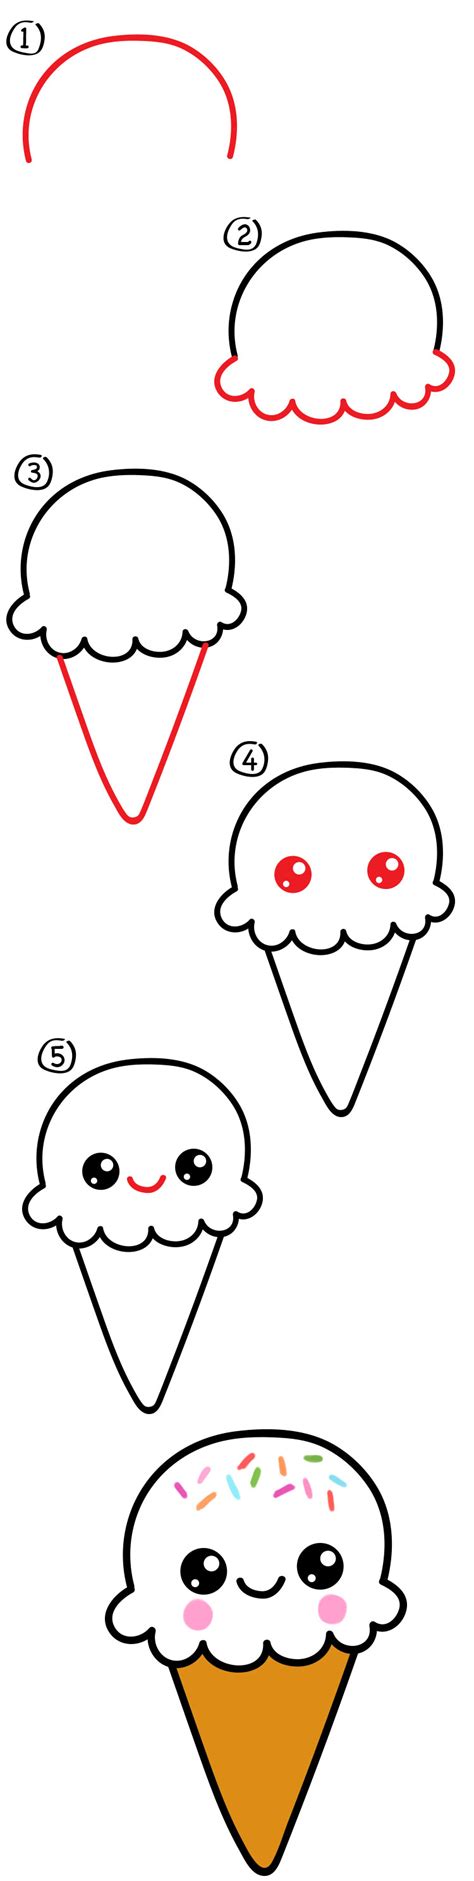 How To Draw Cute Ice Cream Cone